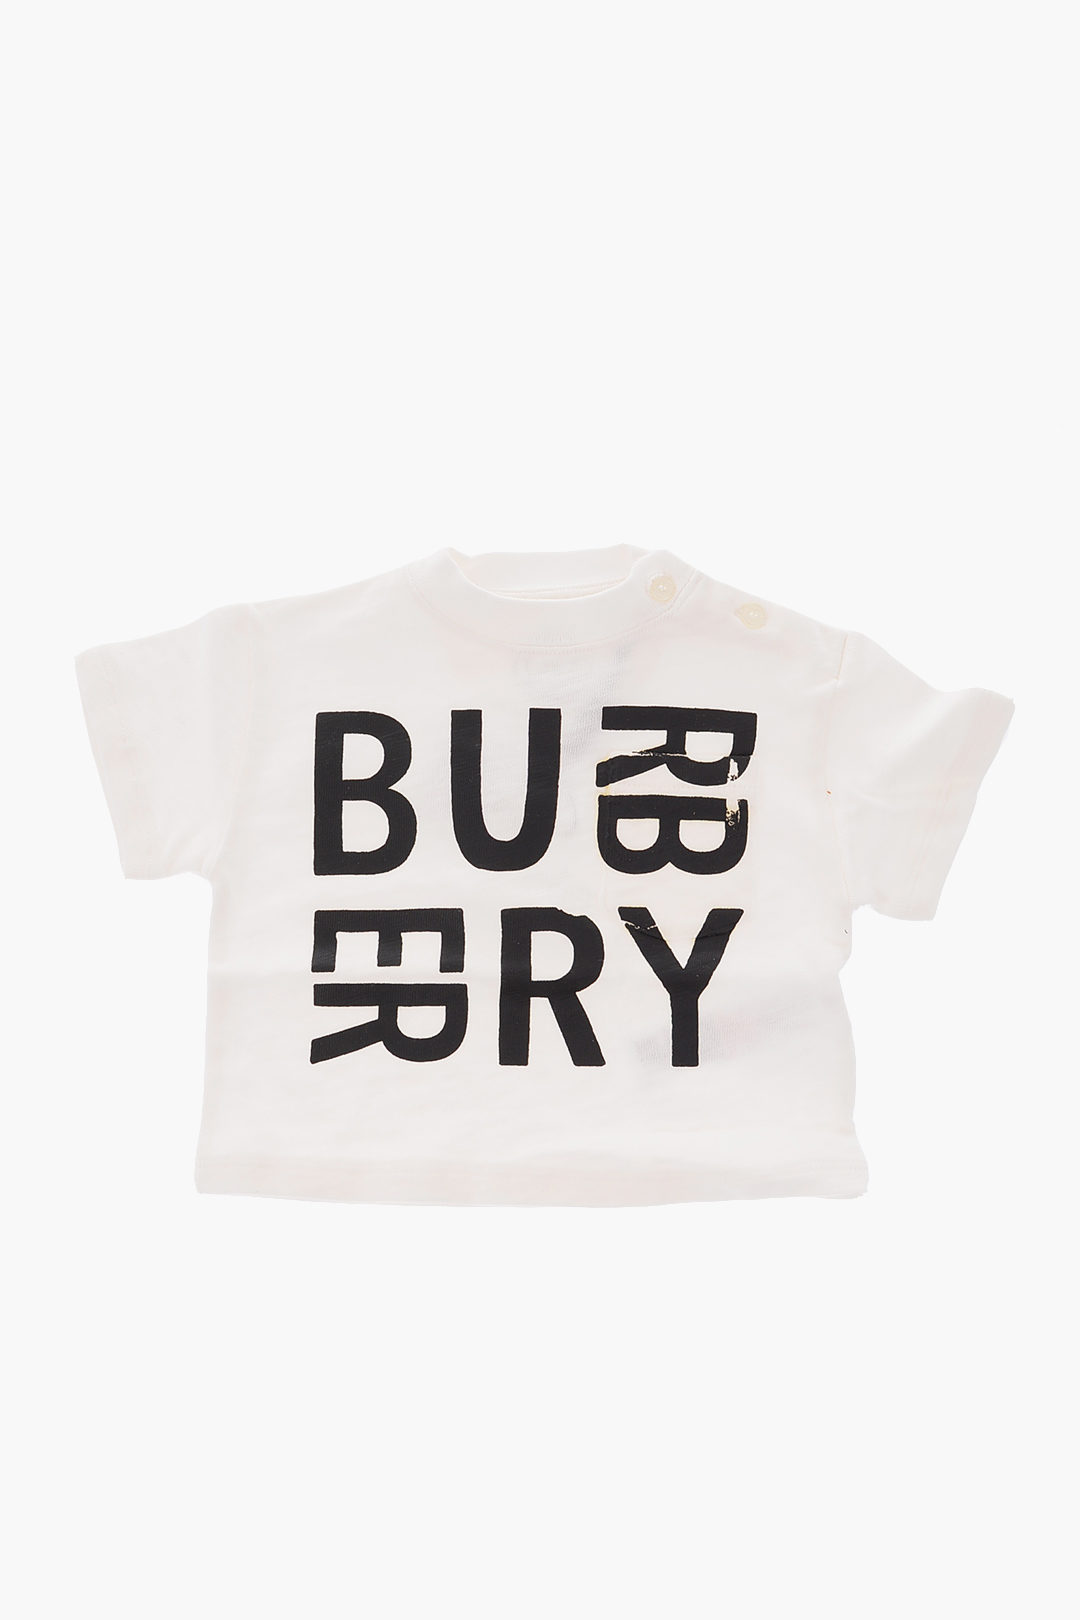 Burberry KIDS T-shirt MINI FURGUS with breast pocket unisex children boys  girls - Glamood Outlet